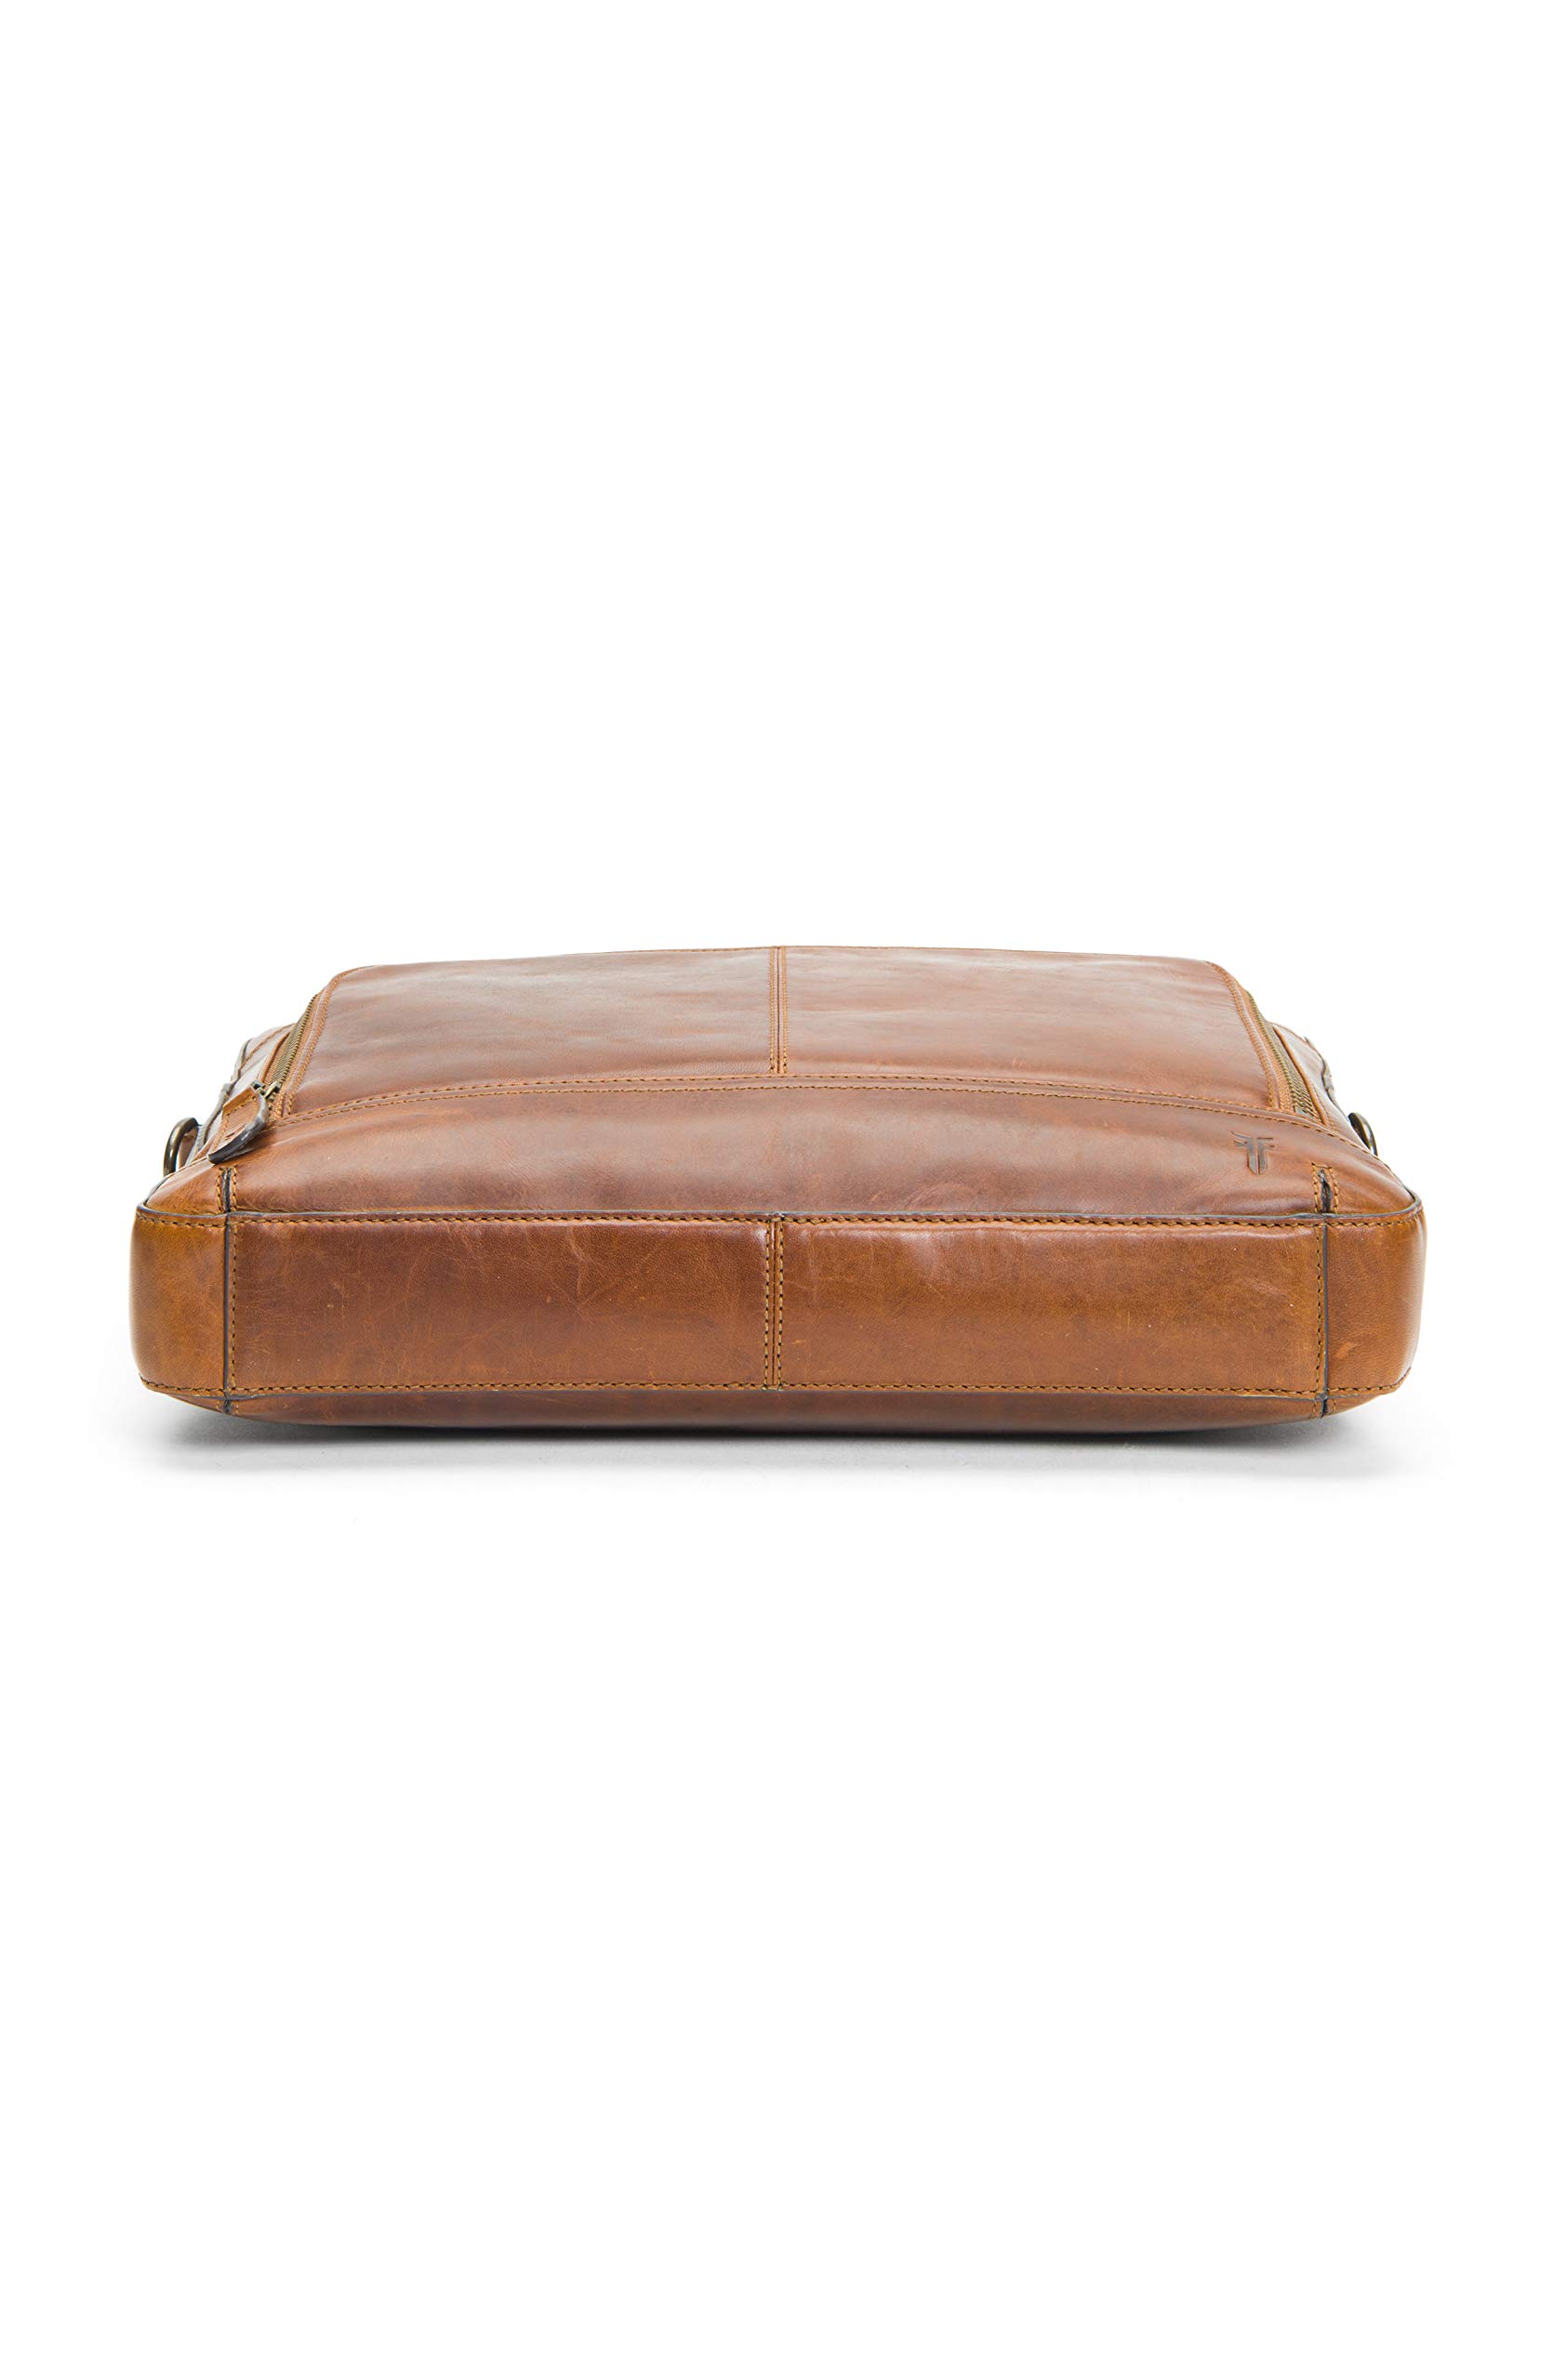 Frye mens Logan Zip Briefcase, Cognac, One Size US